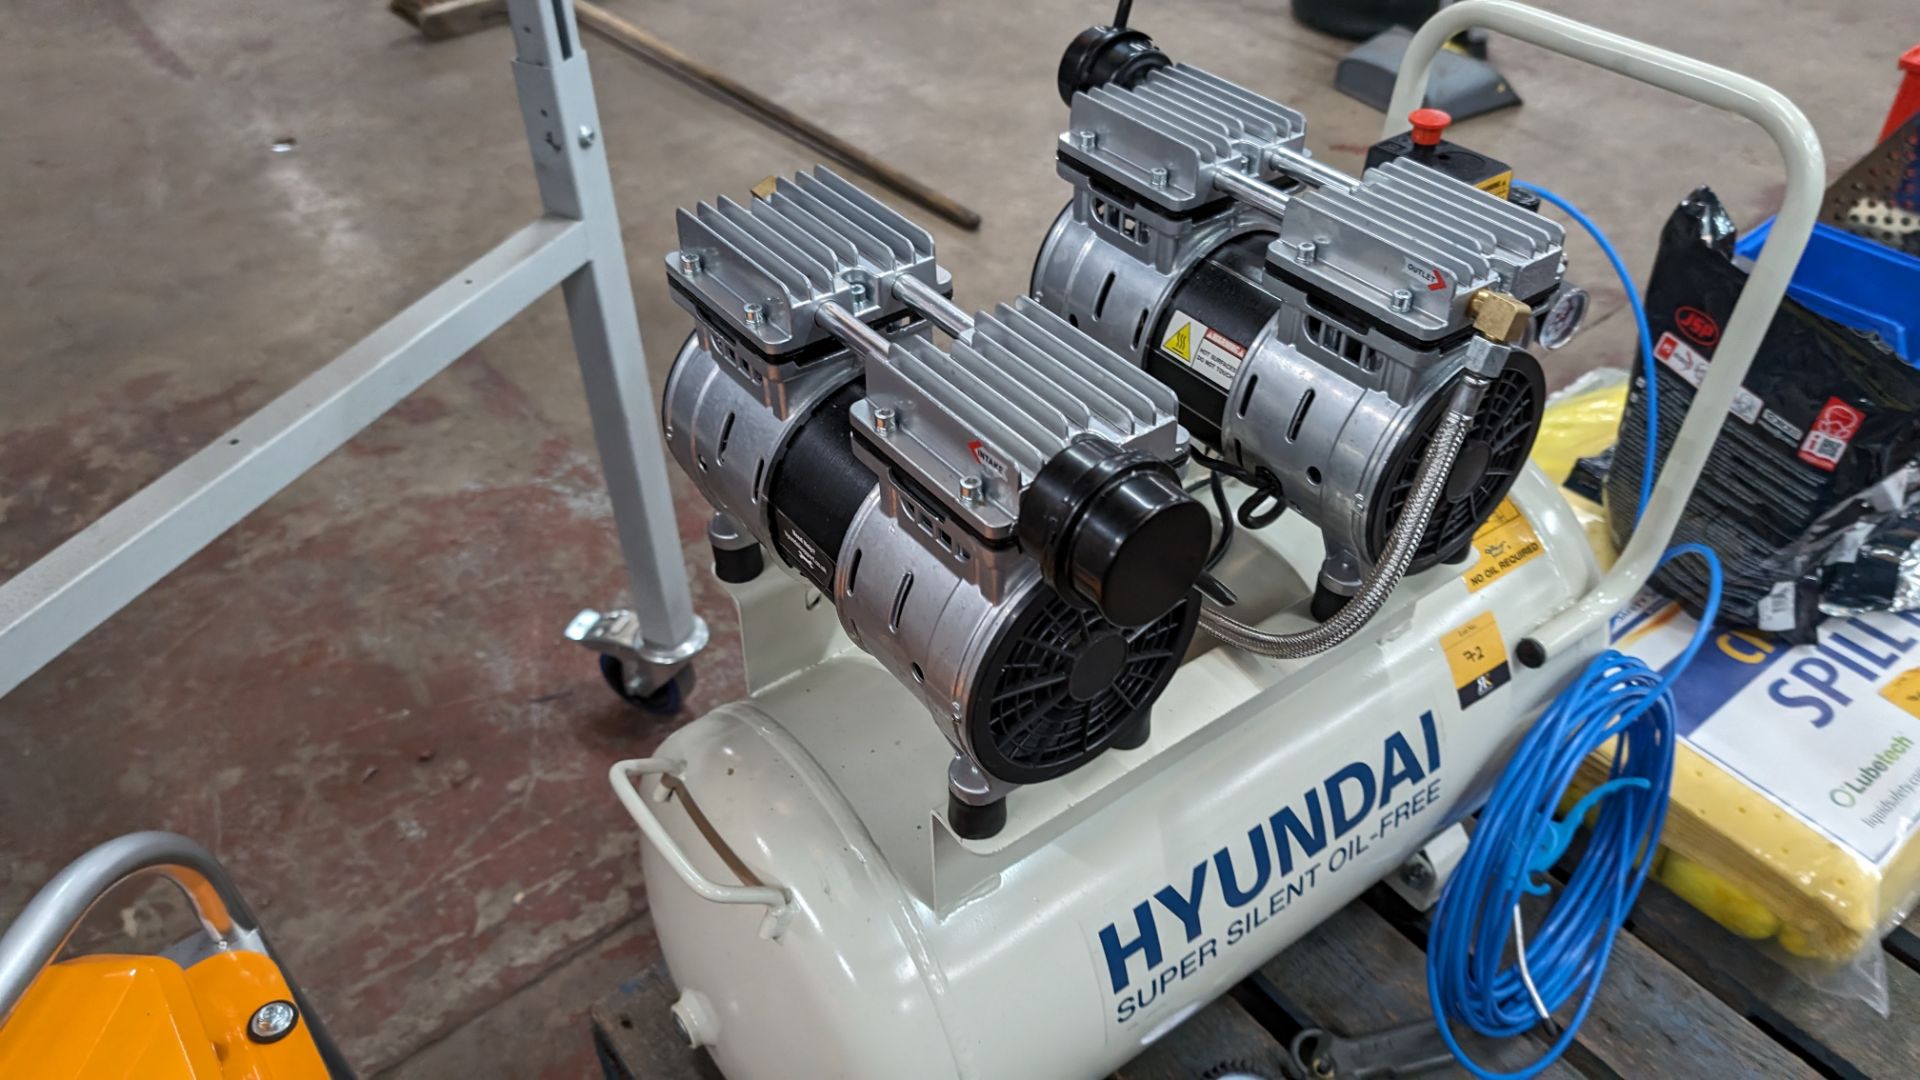 Hyundai super silent oil-free compressor system model HY27550 - Image 6 of 11